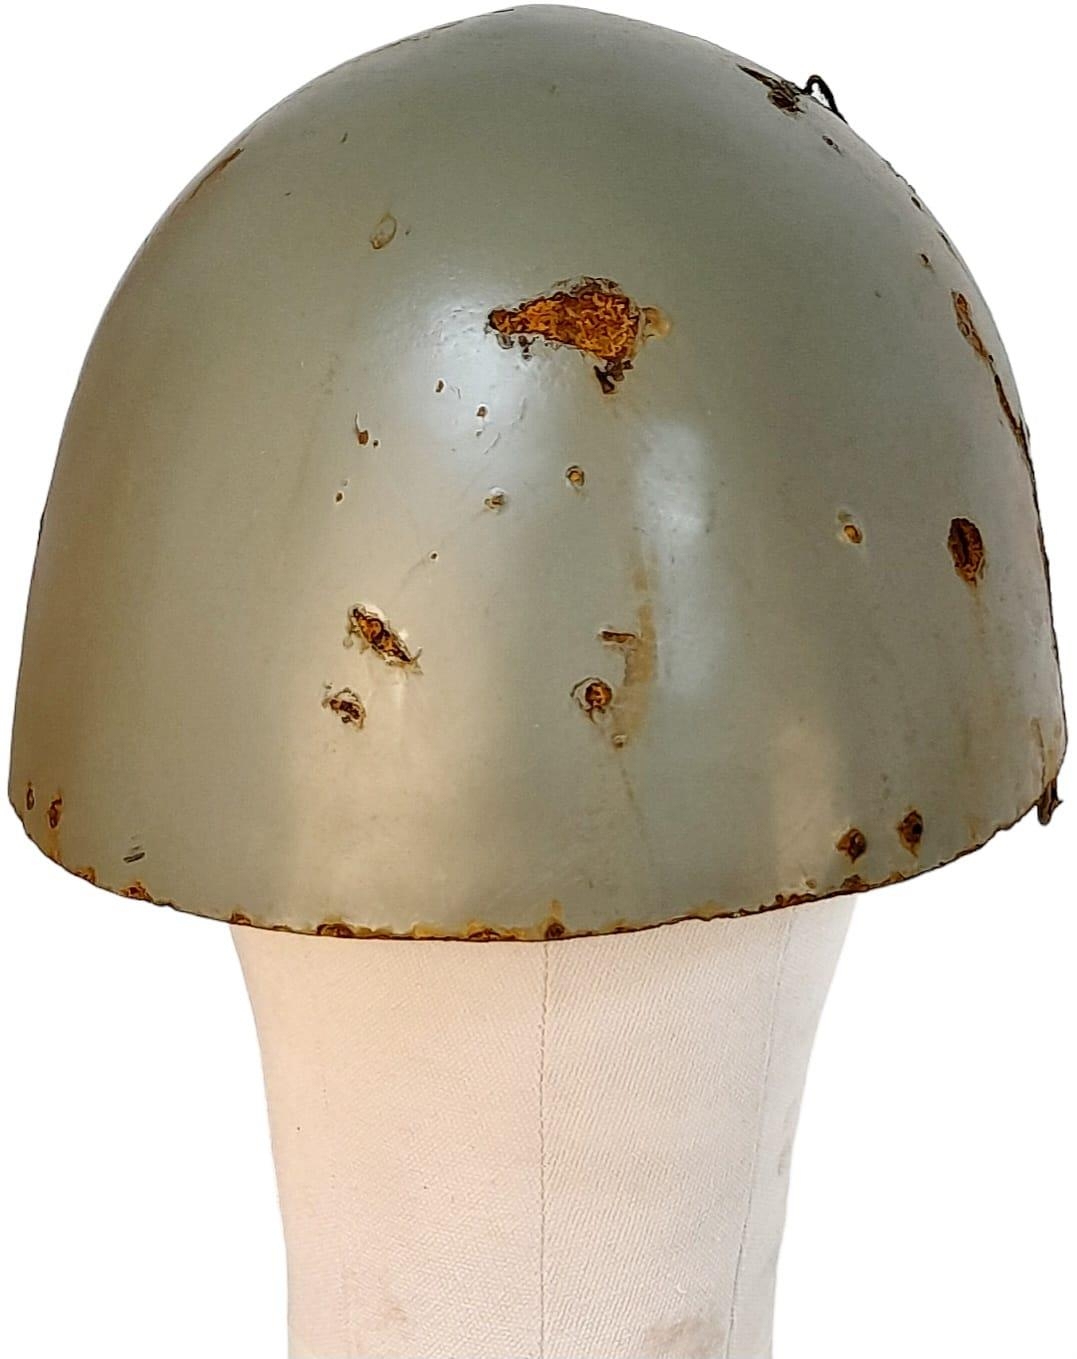 Rare WW2 Japanese Rare Rikusentai Paratrooper Helmet (no badge or liner) Part of the Special Naval - Image 3 of 4